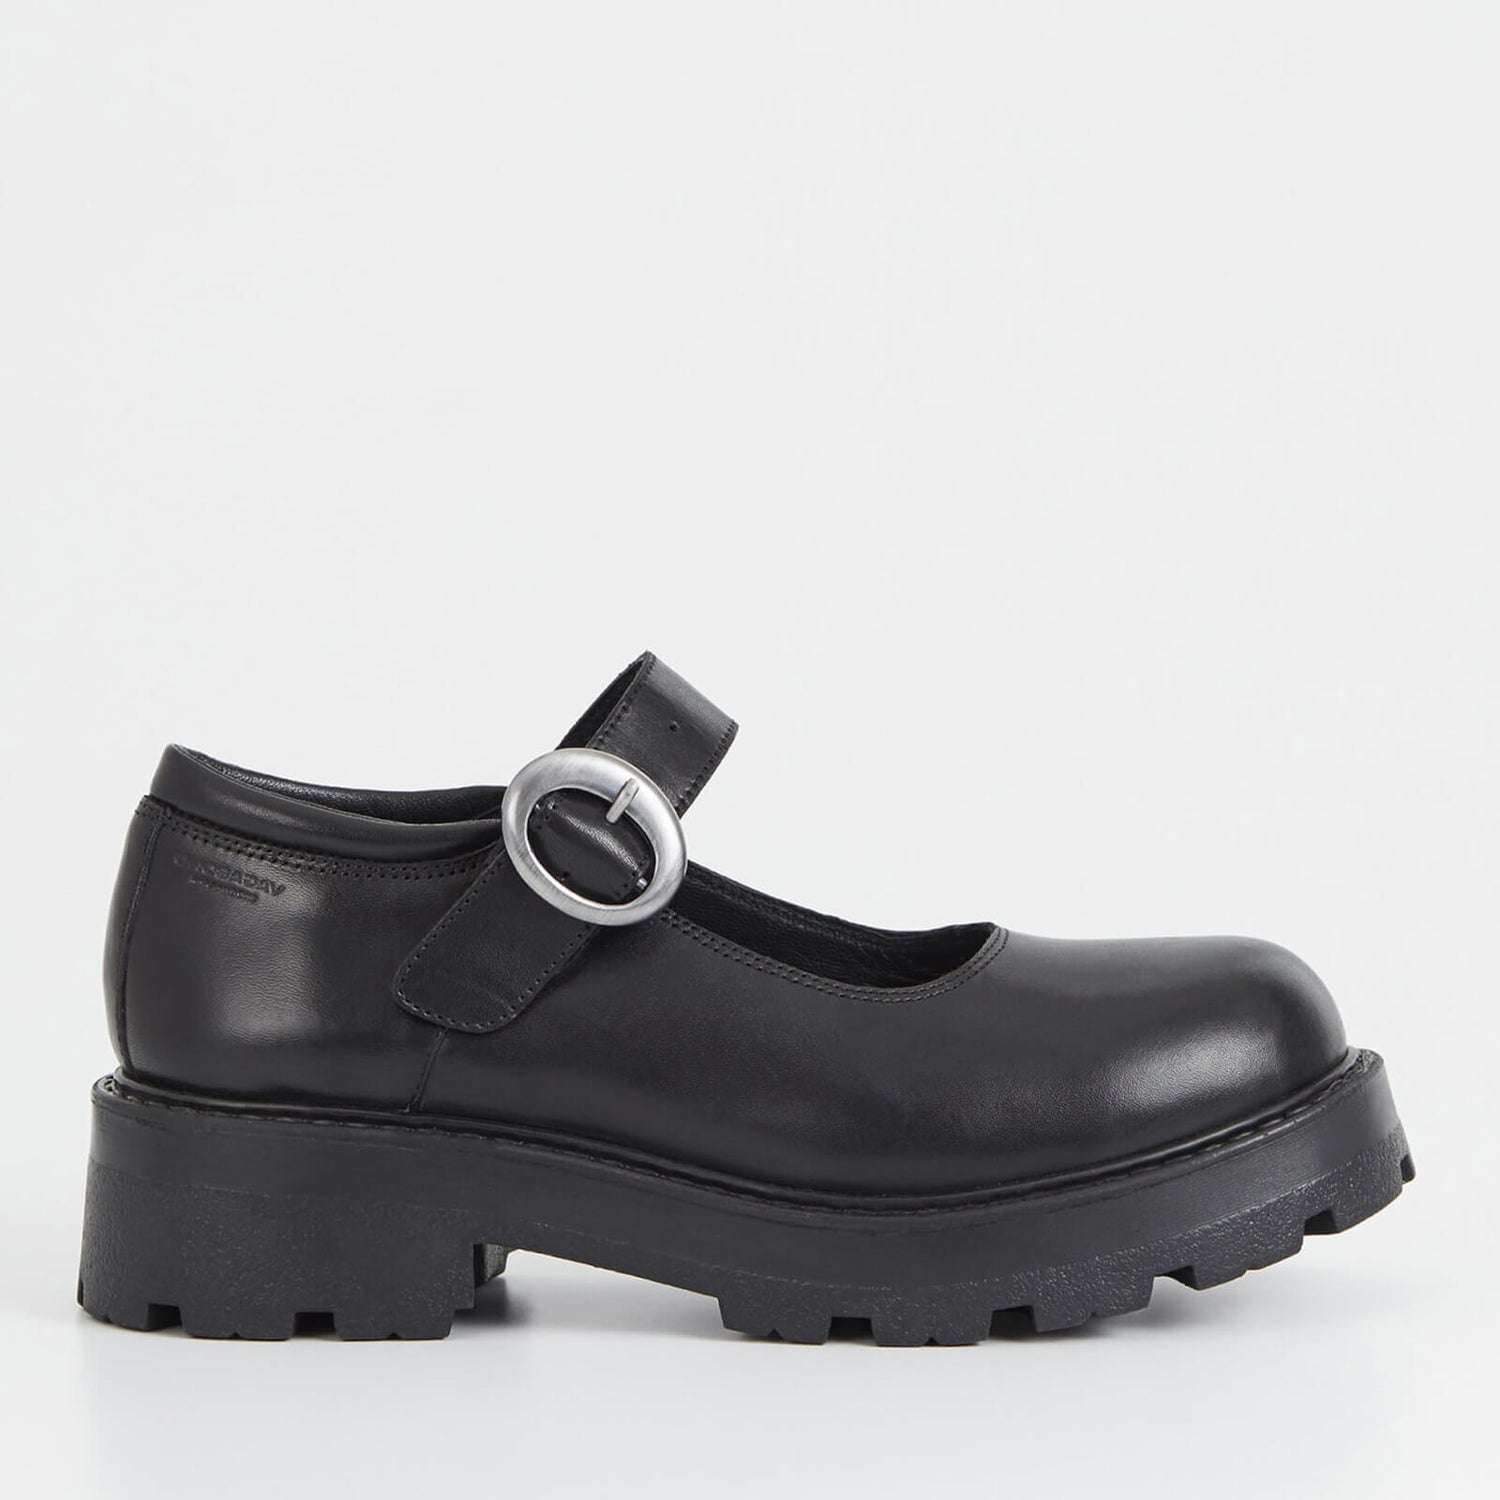 Vagabond Cosmo 2.0 Leather Mary Jane Shoes - UK 5